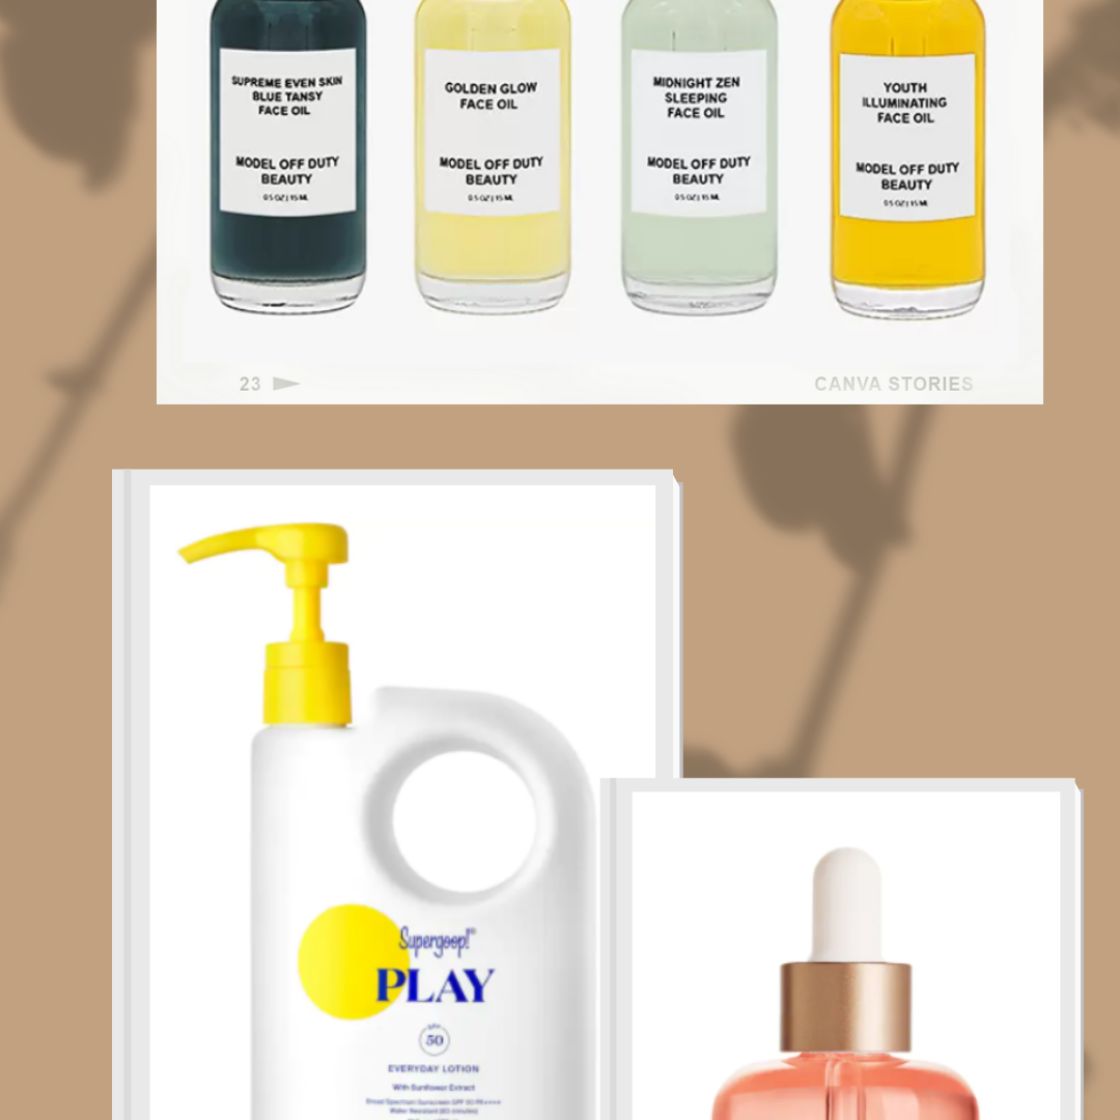 A Careful Assortment Of 5 Clean Beauty Brands